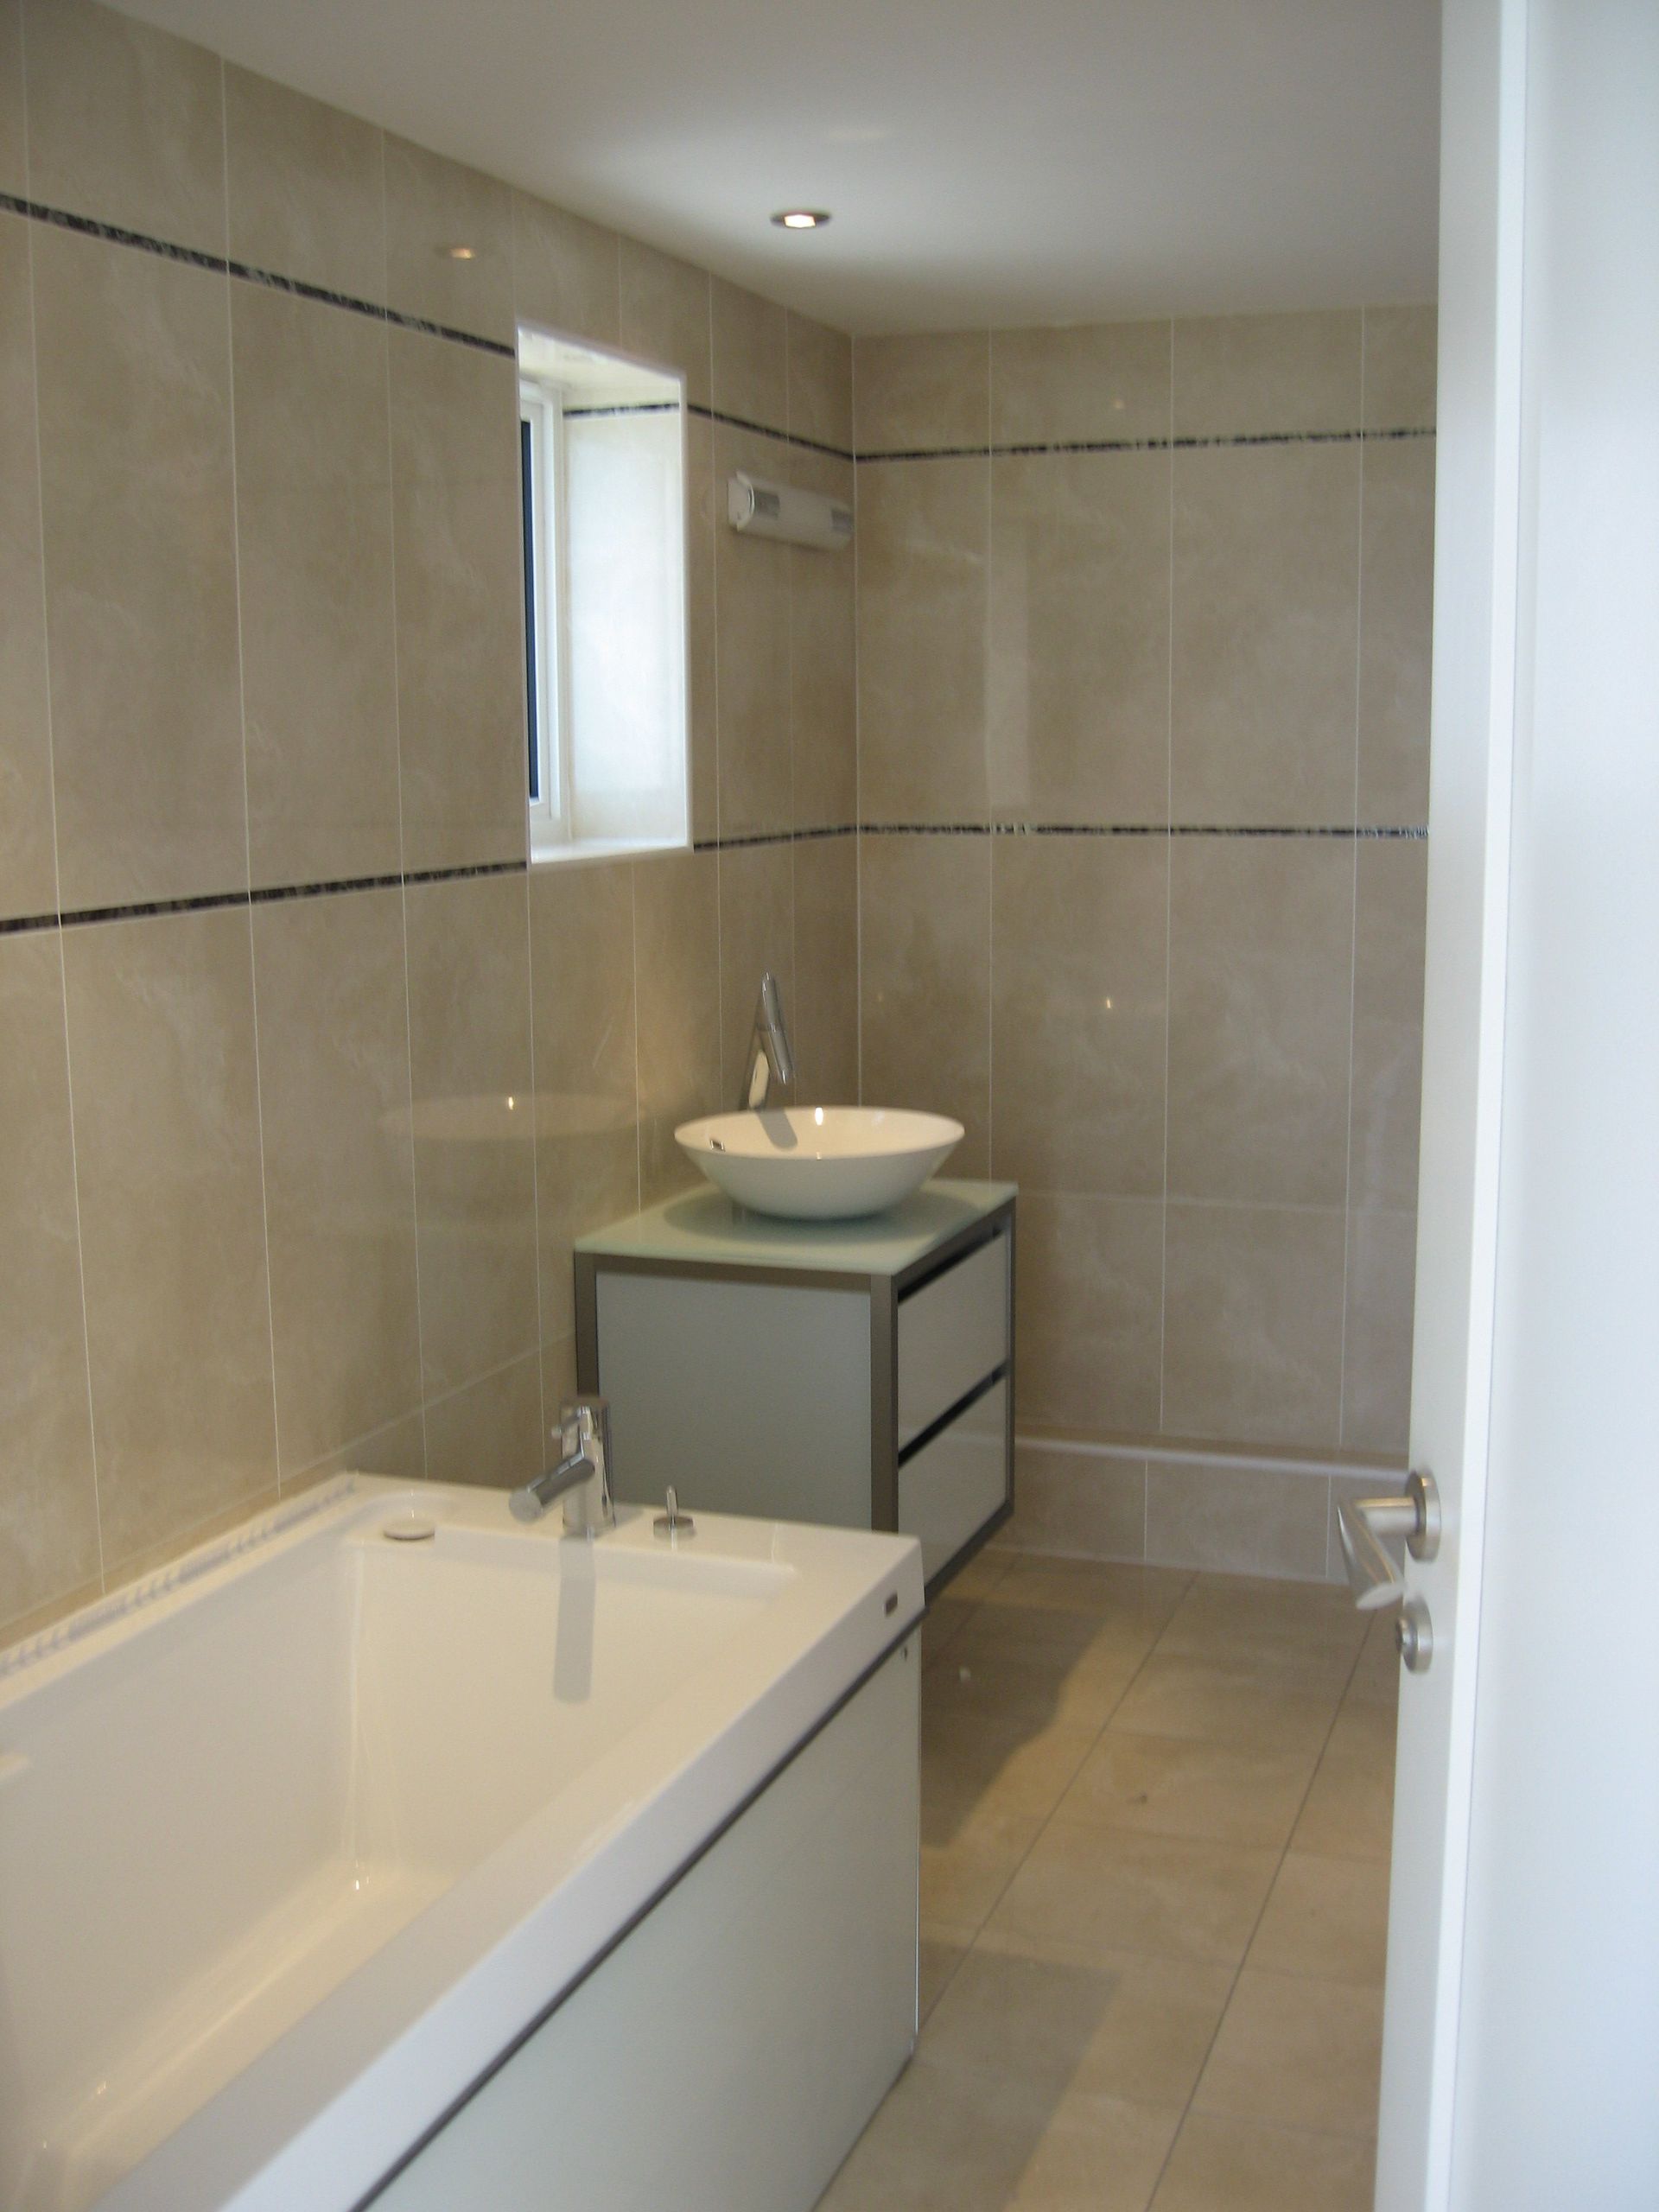 new bathroom installation by RTB construction in Cheltenham